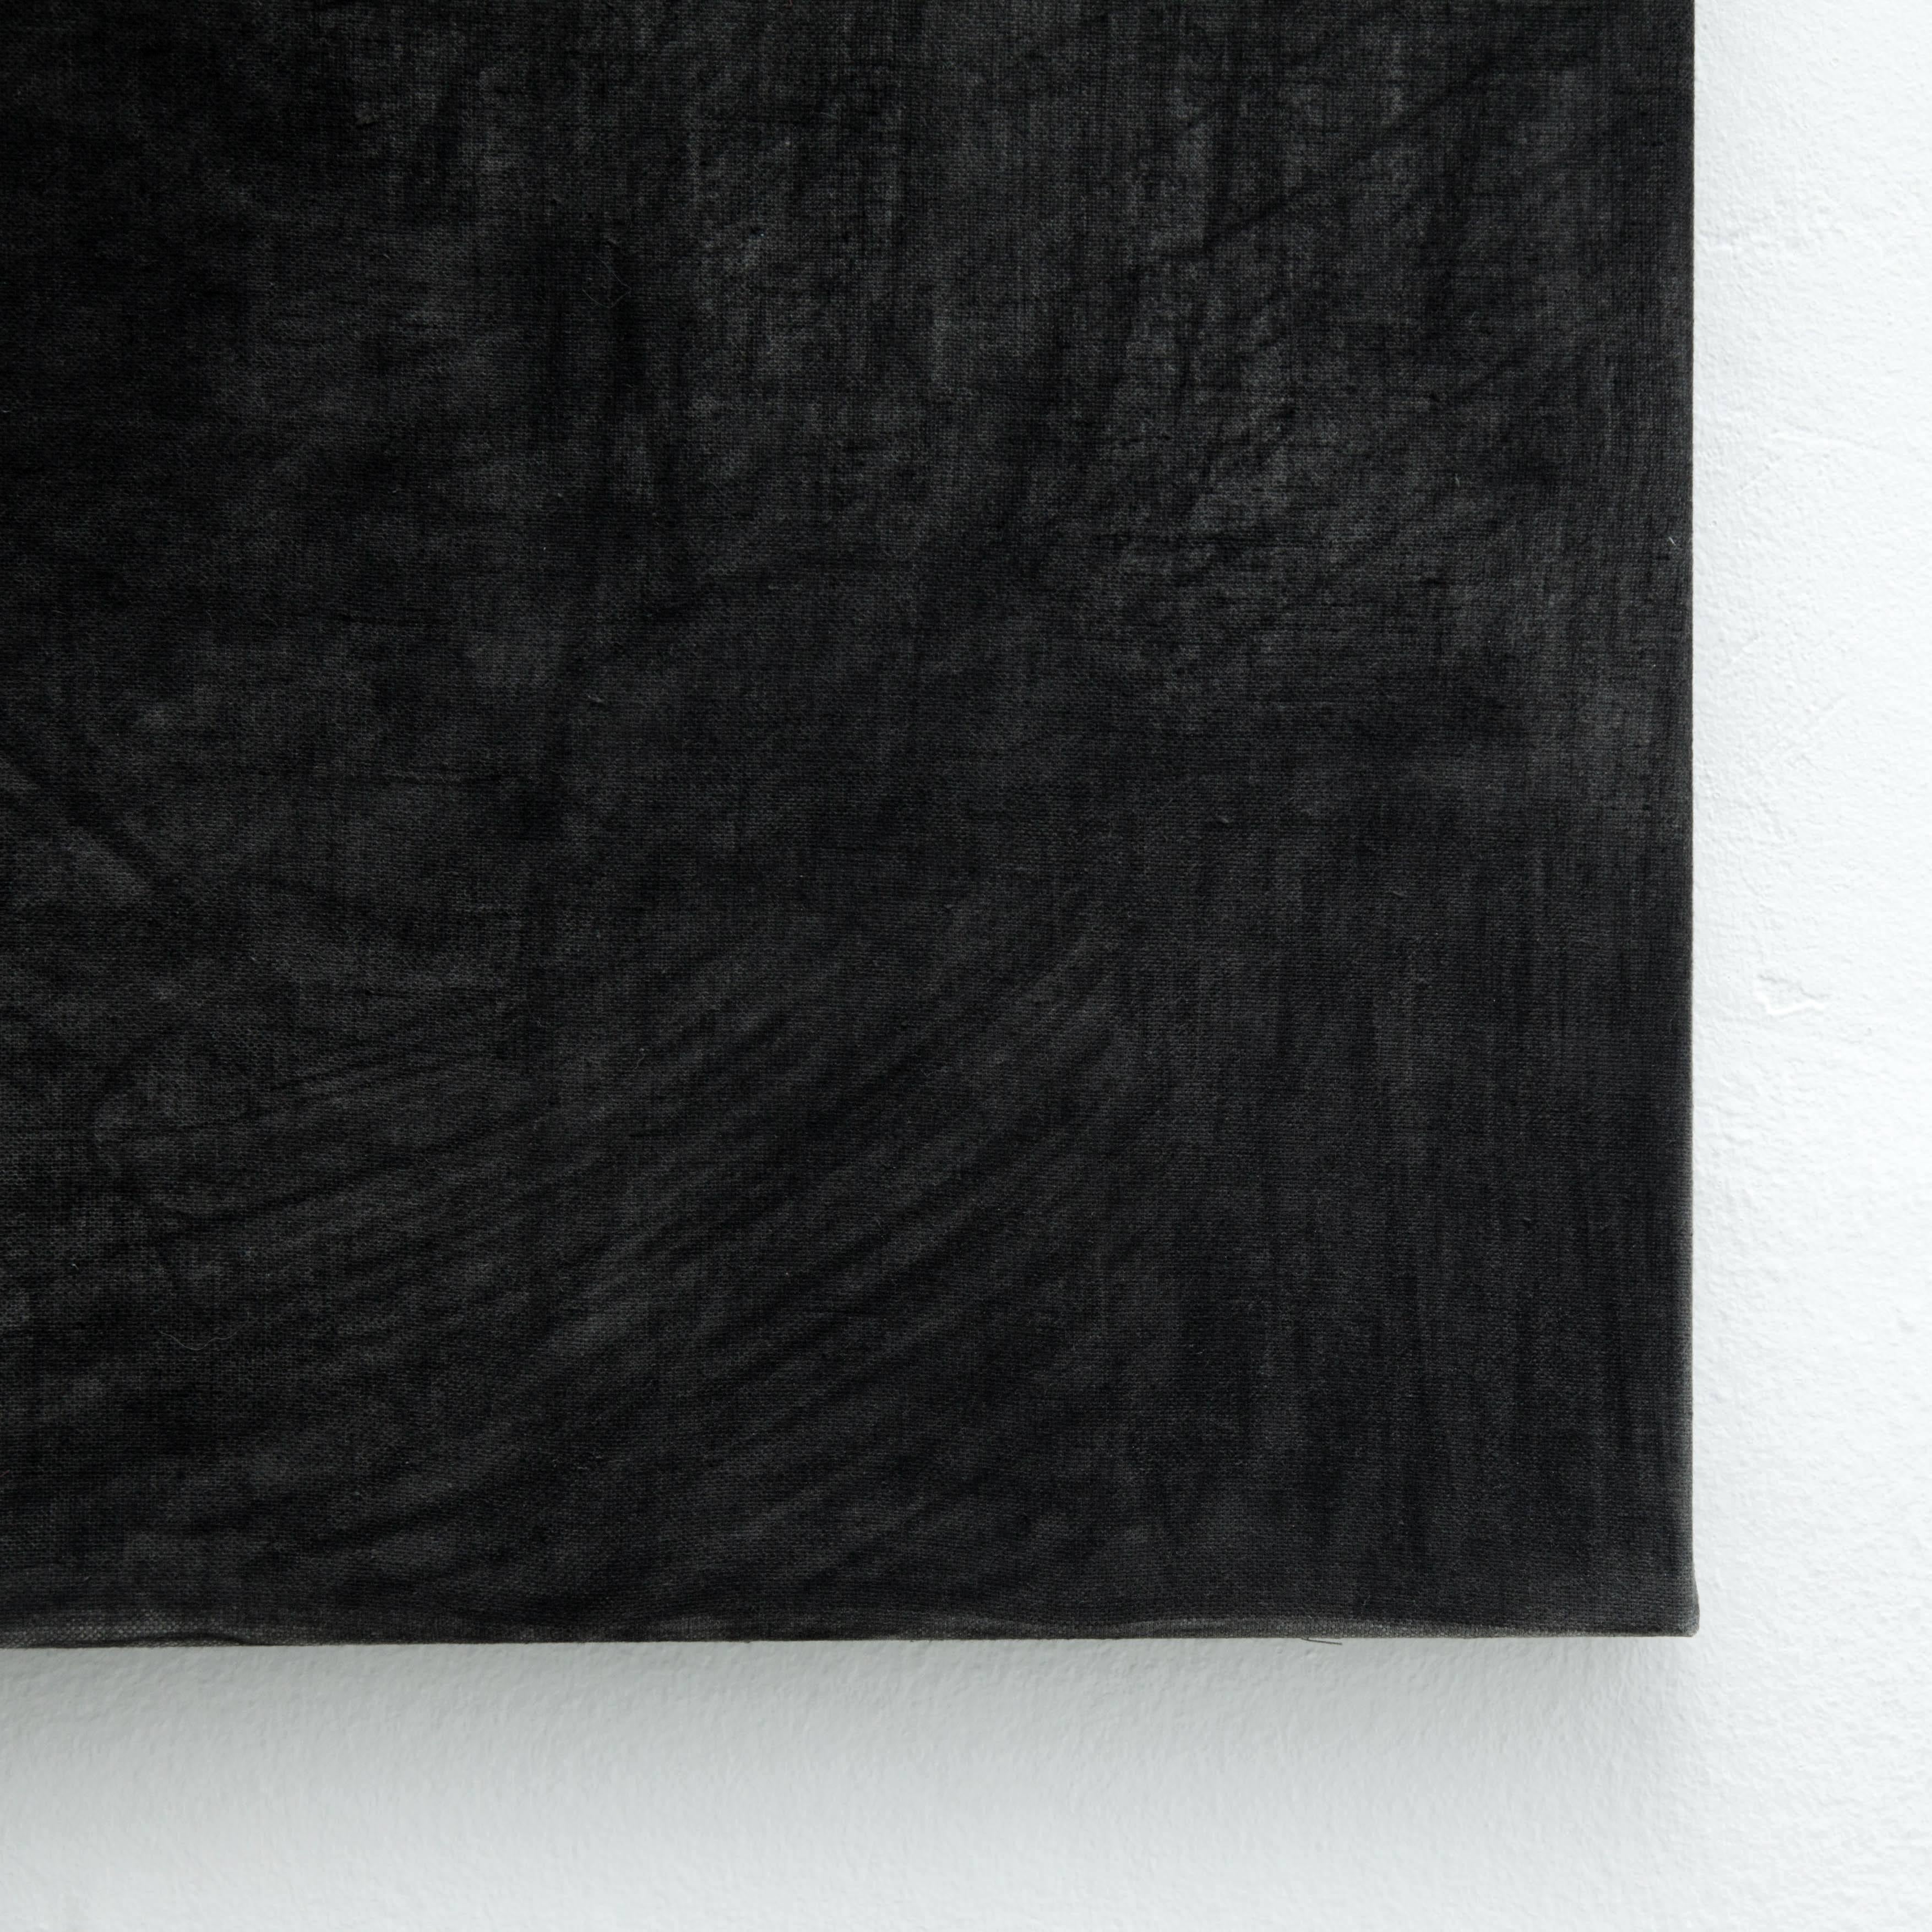 Spanish Enrico Dellatorre Black Painting